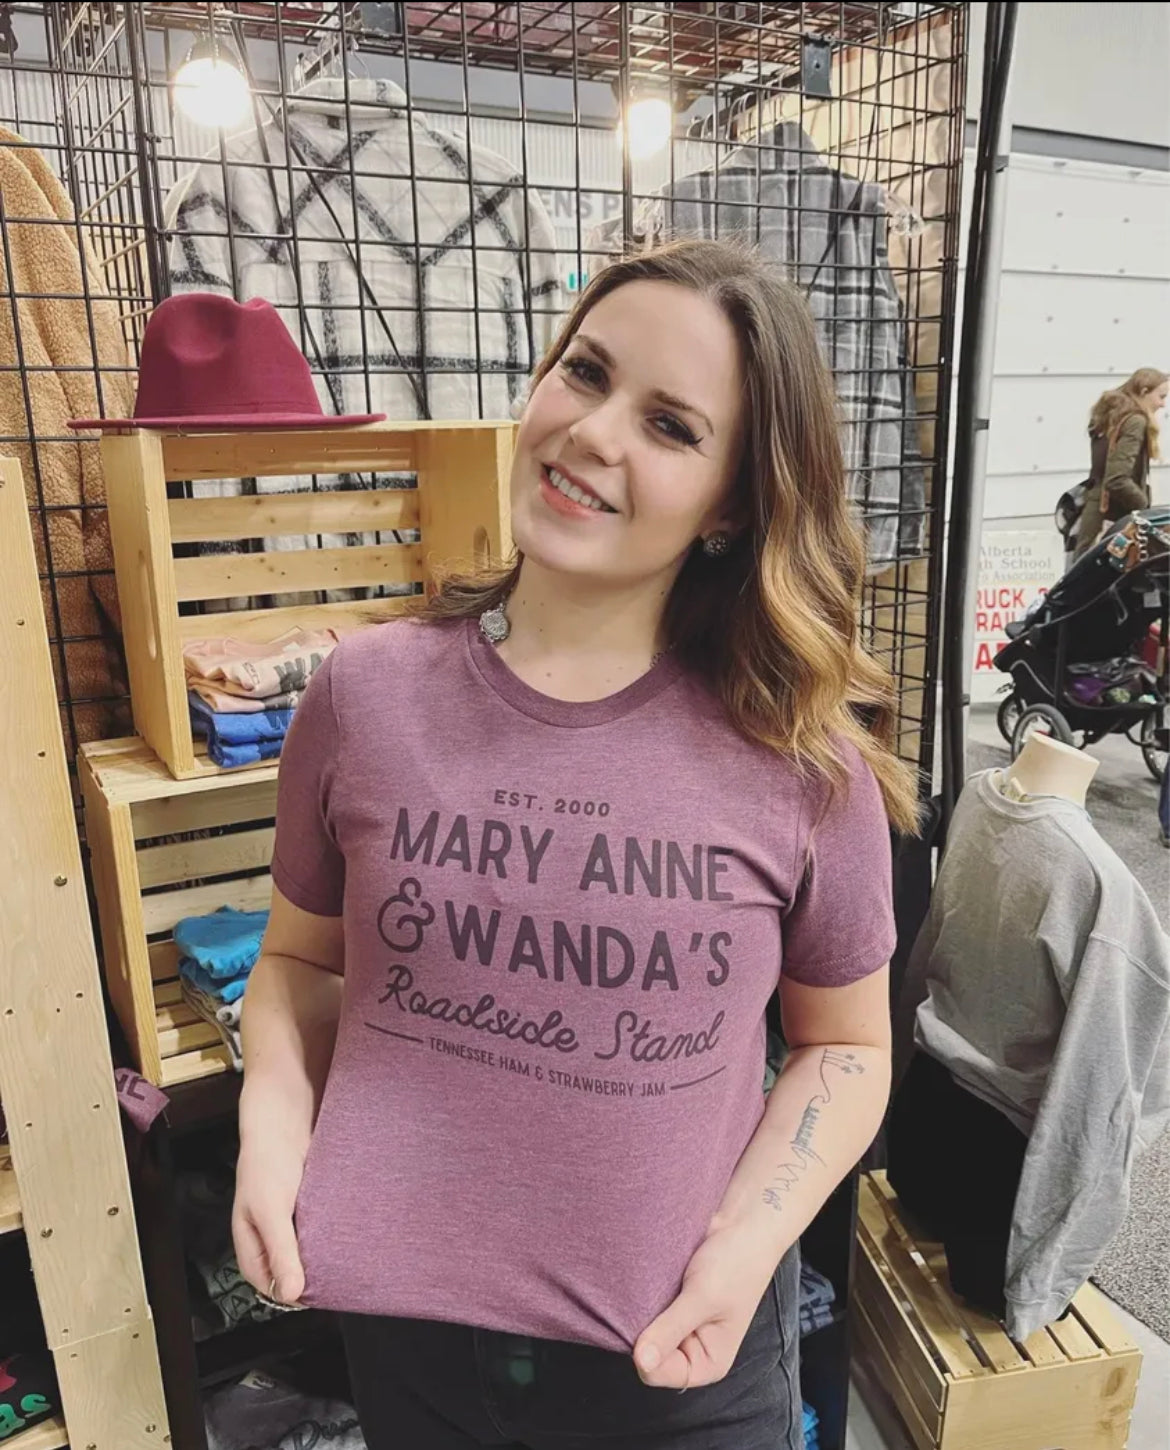 Mary Anne and Wanda’s Roadside Stand T-shirt